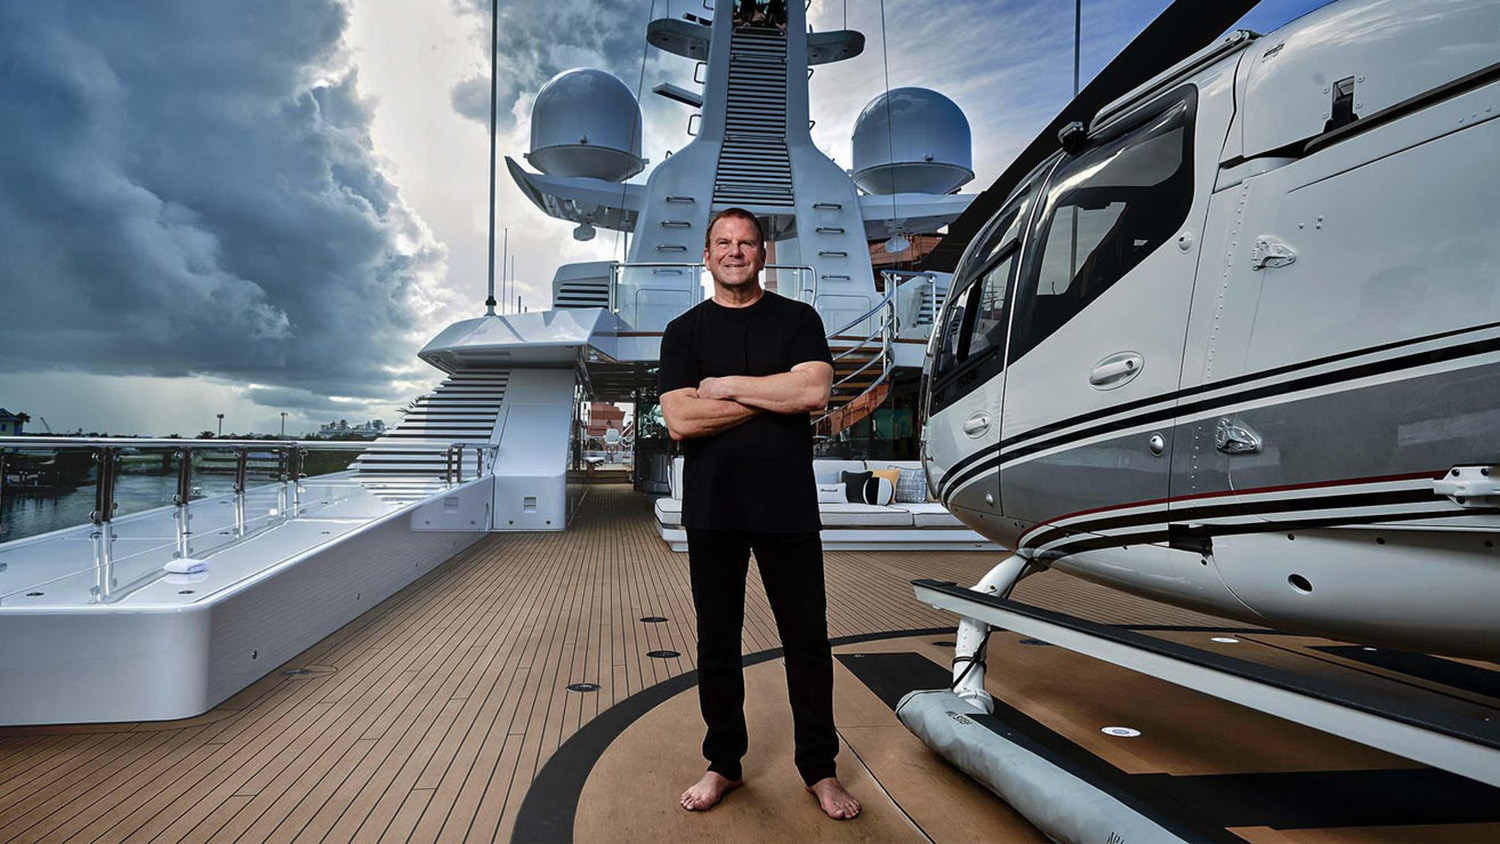 Tilman Fertitta’s new 252-foot yacht